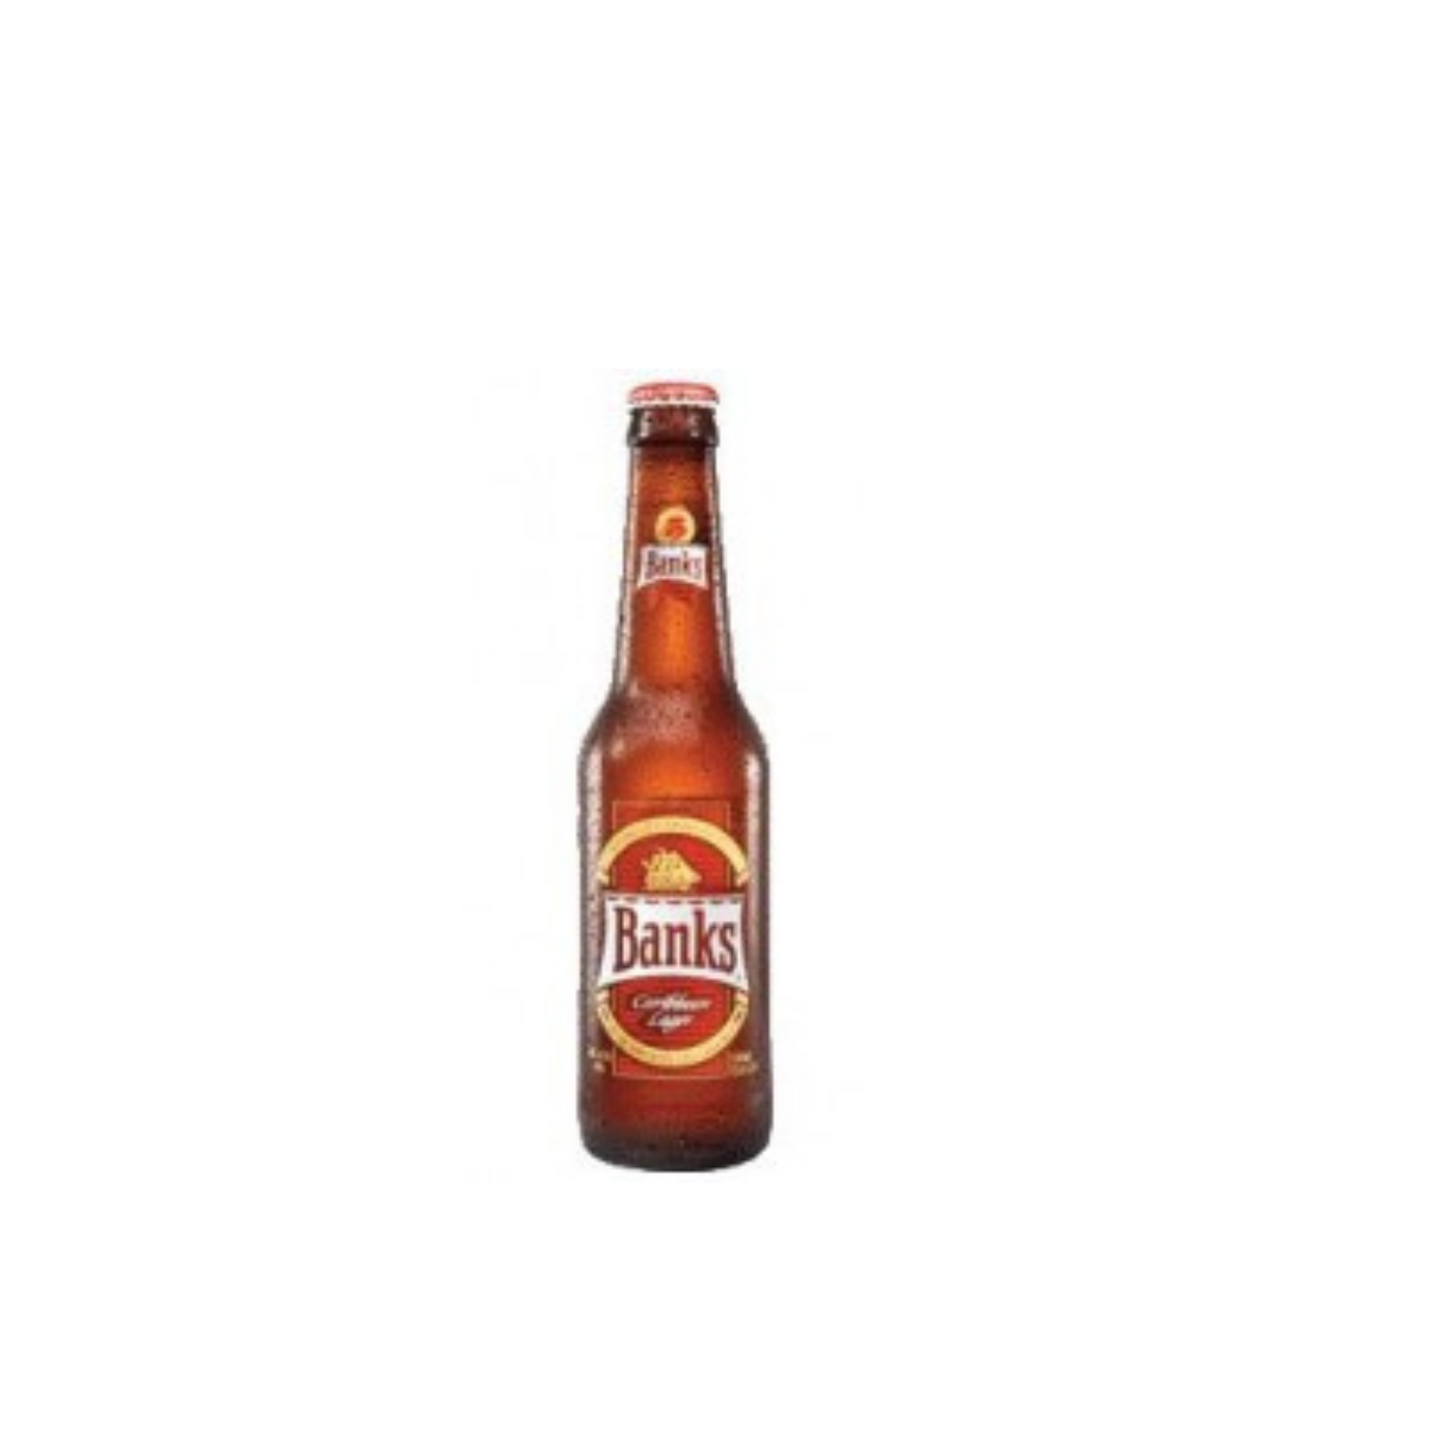 Banks Beer - Bottle - 275ml (6 Pack)